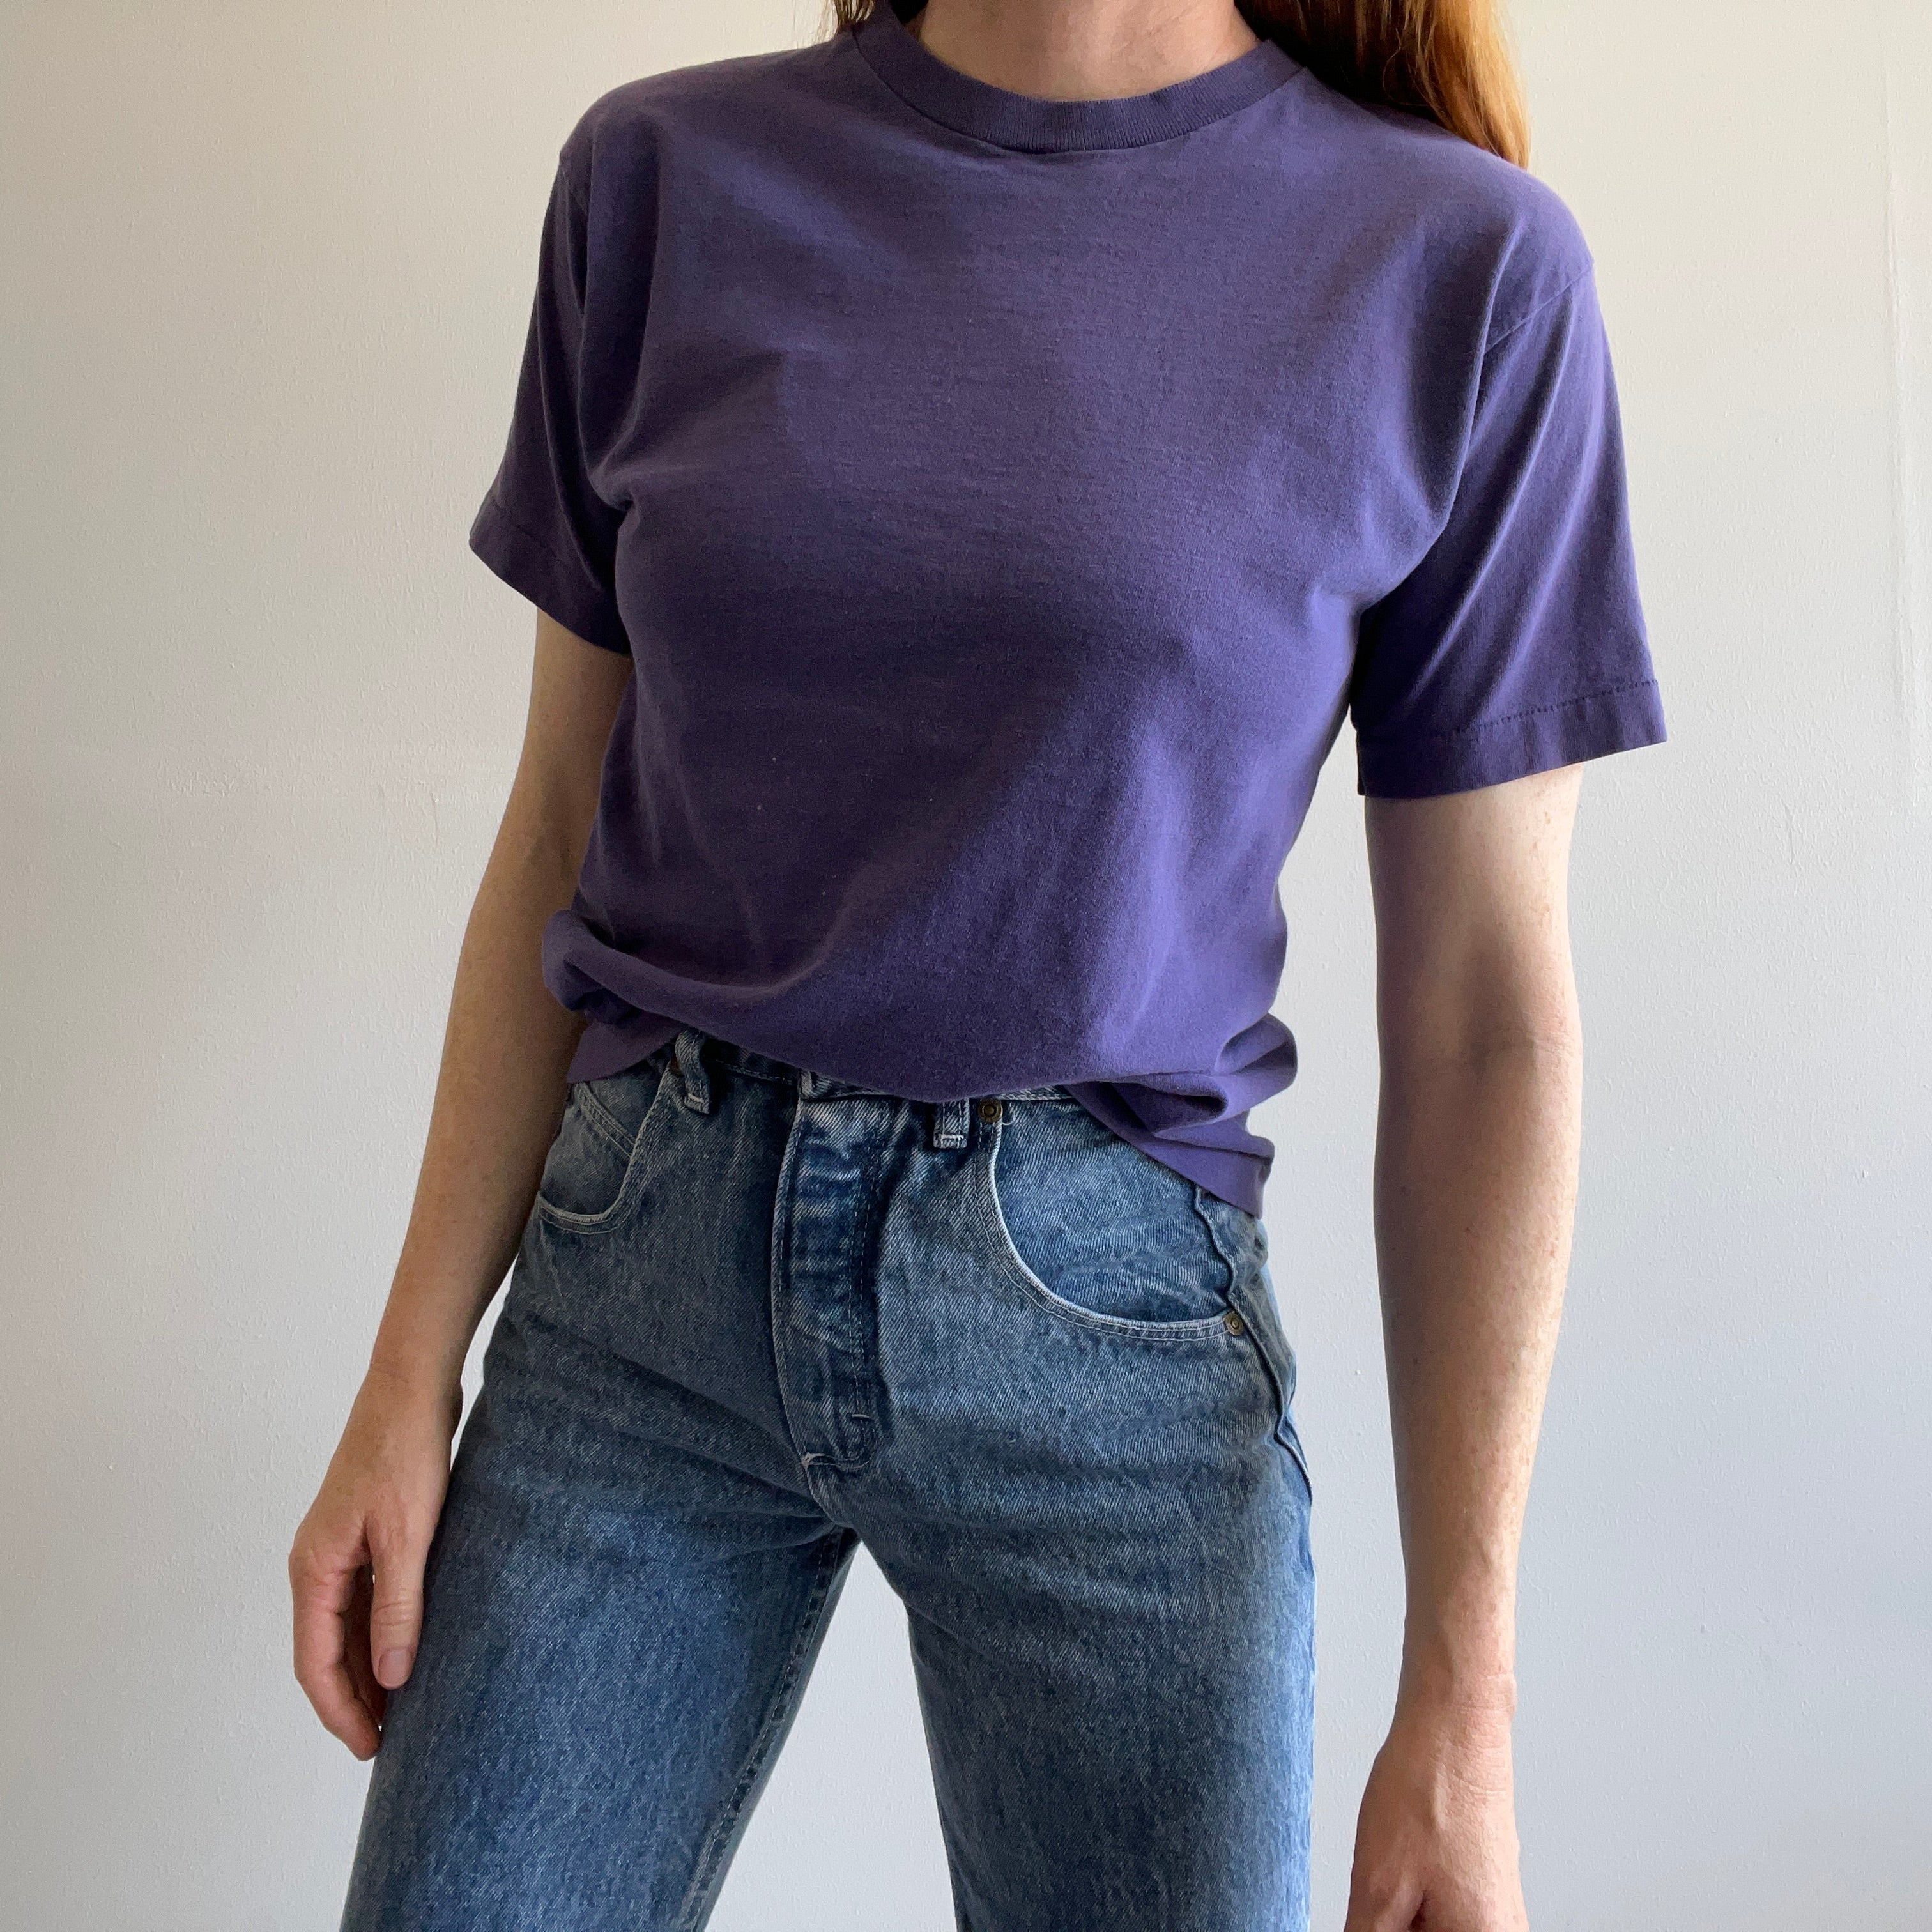 1990s Sun Faded Navy/Purple Cotton Single Stitch T-Shirt